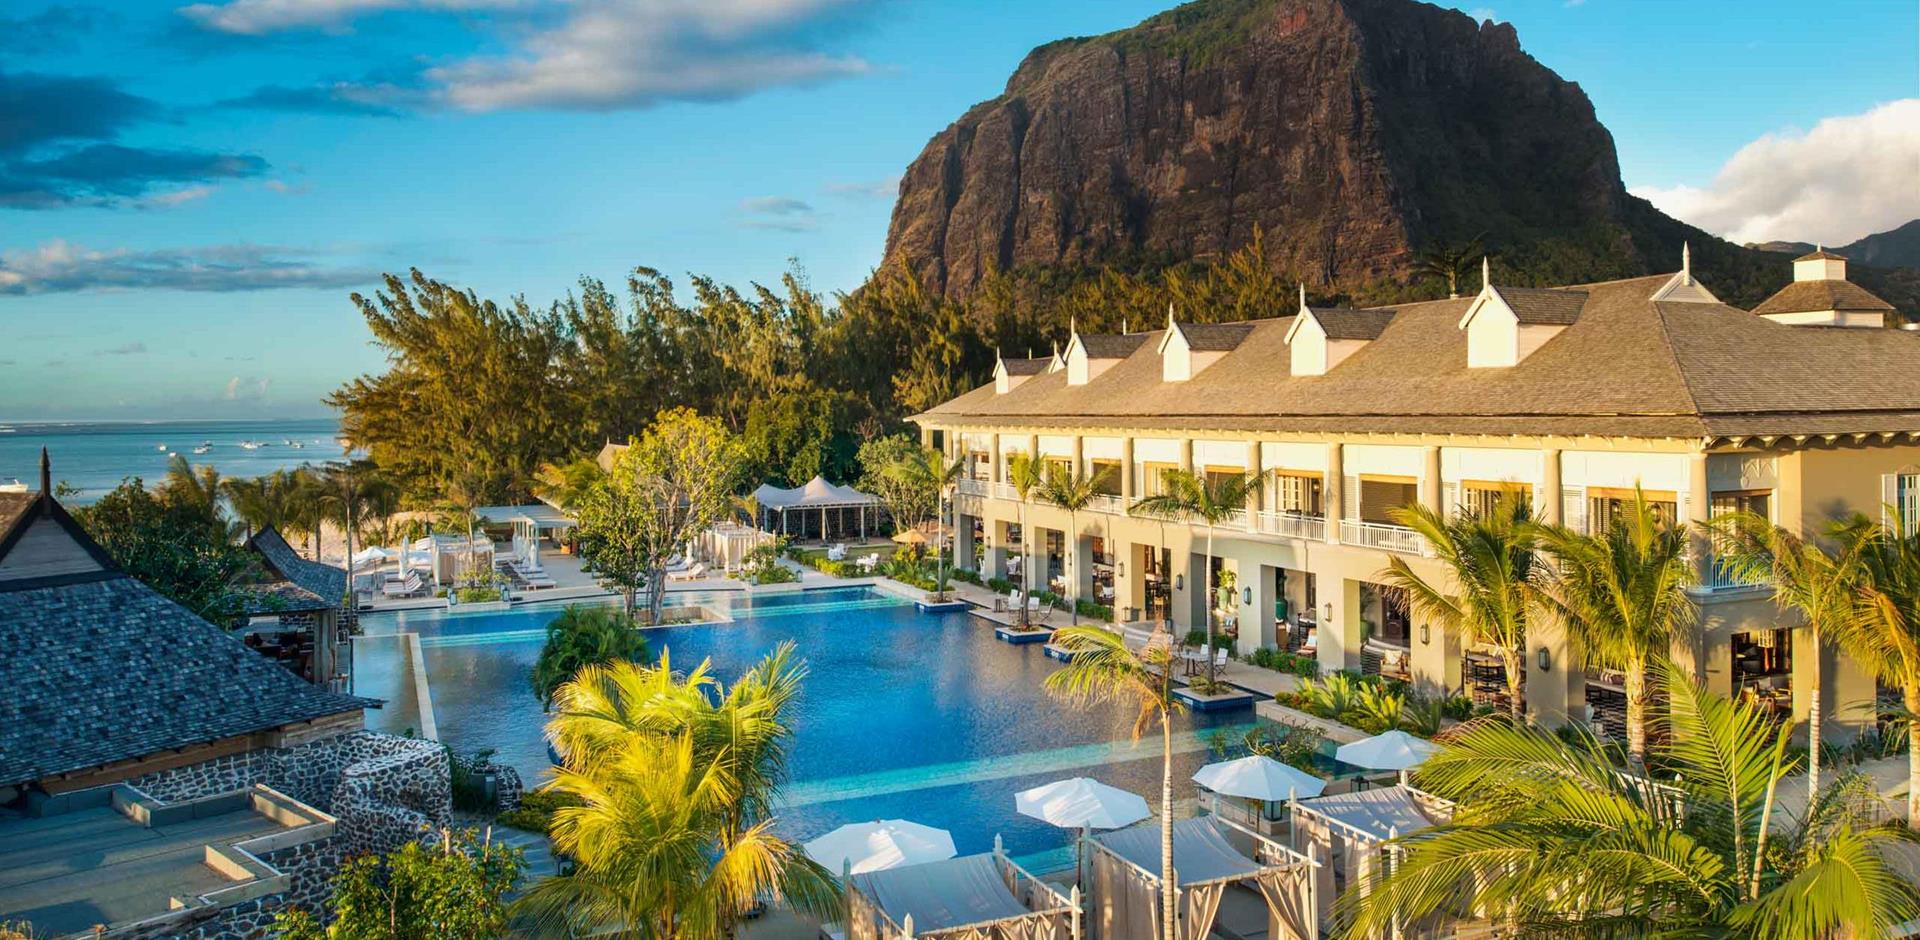 JW Marriot Mauritius Resort, Mauritius, A&K